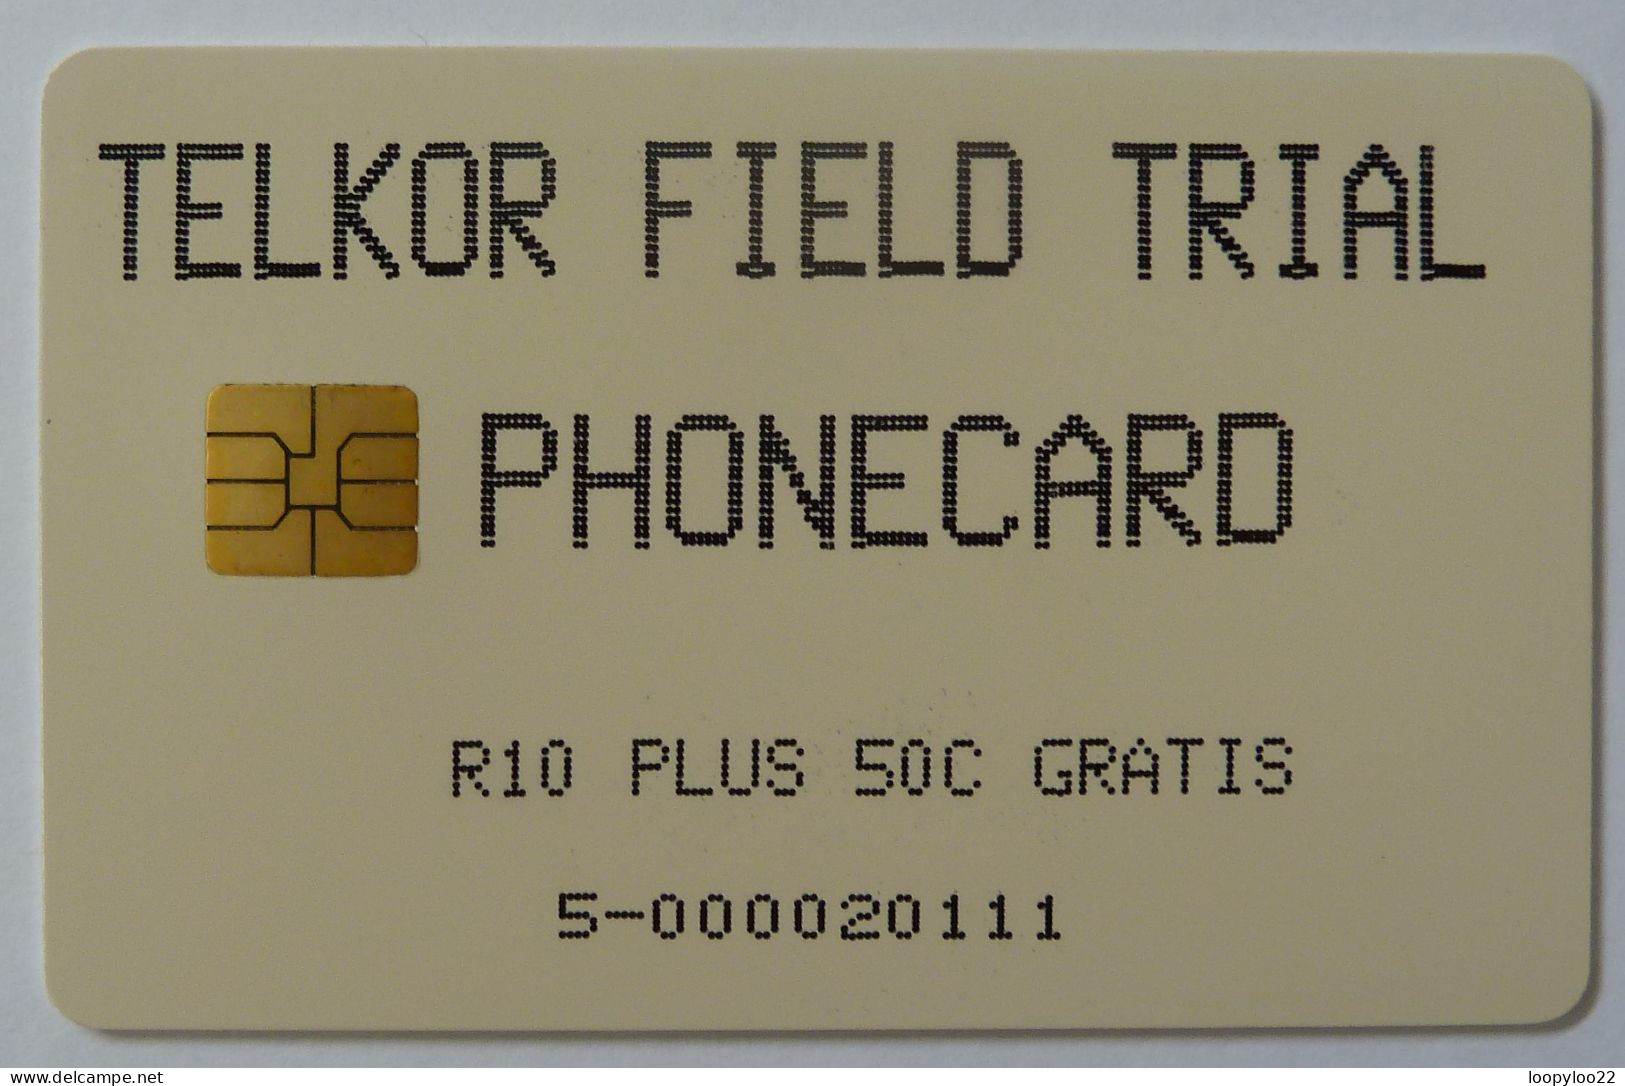 SOUTH AFRICA - Telkor Field Trial - R10 PLus 50c Gratis - 100ex - RRR - South Africa